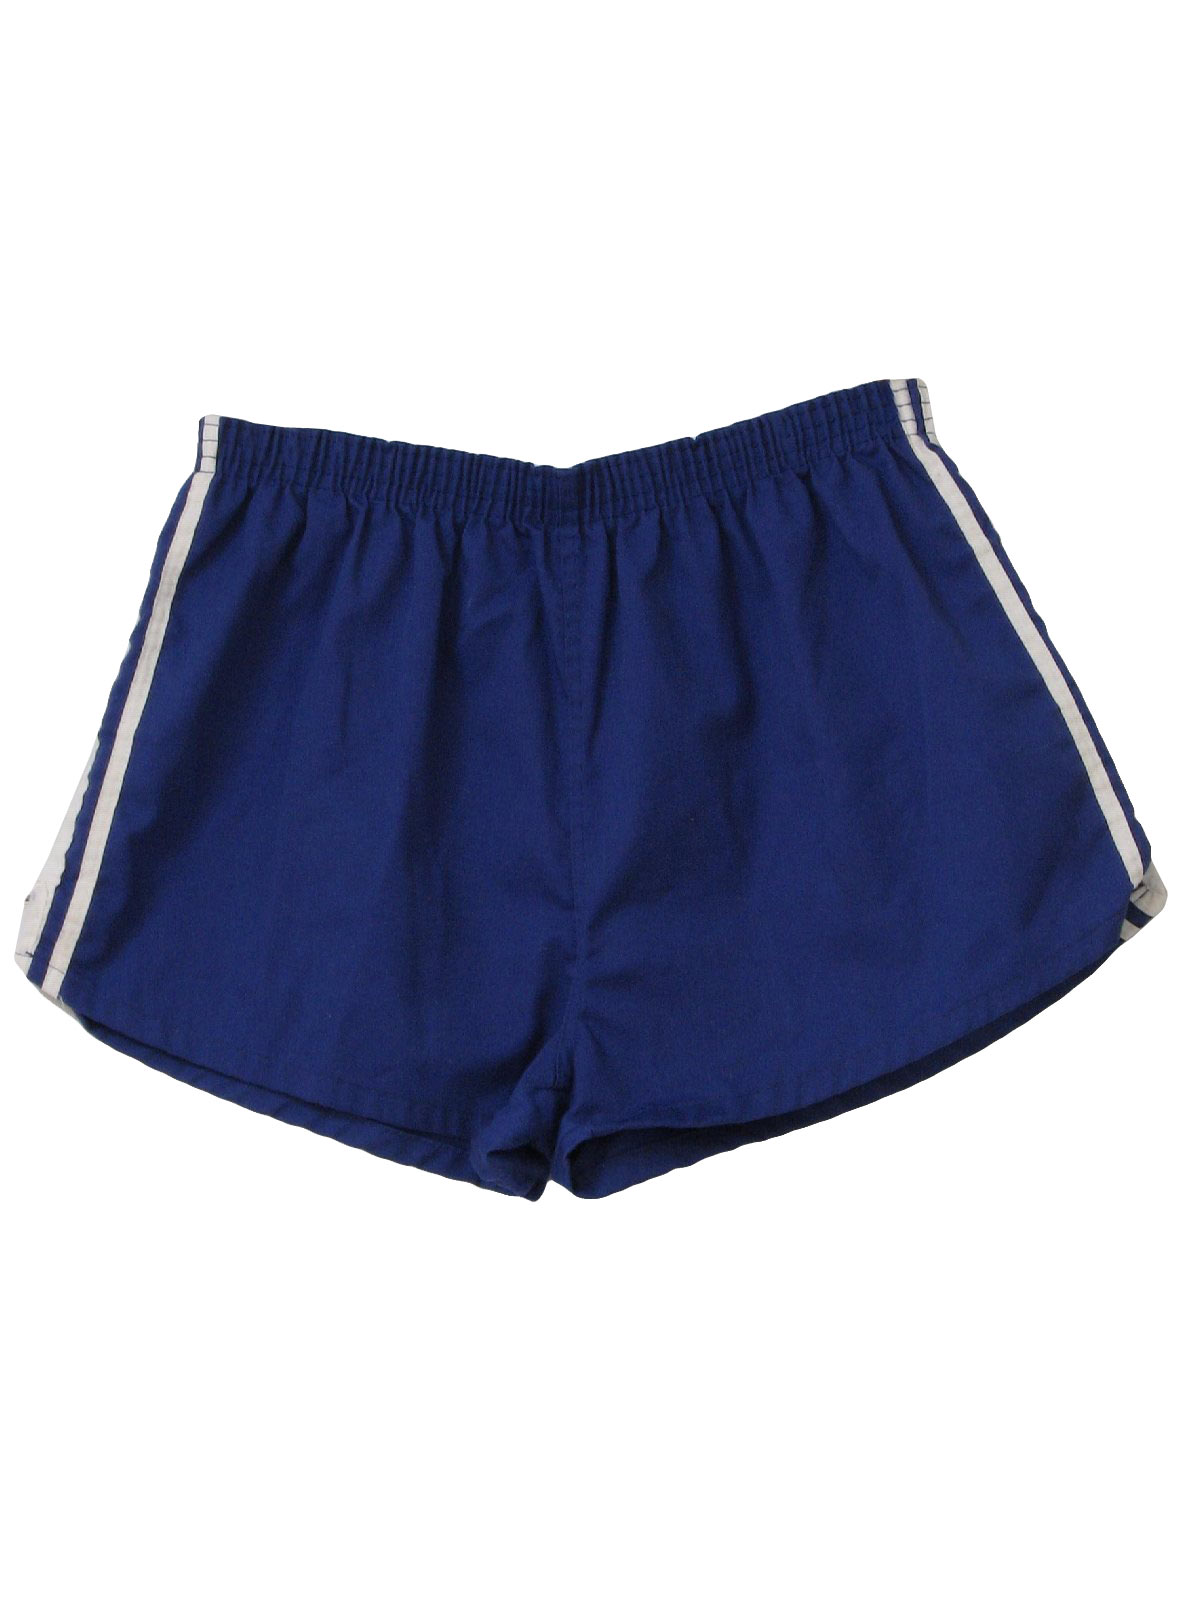 Athletic Shorts Eighties Vintage Shorts: 80s -Athletic Shorts- Mens ...